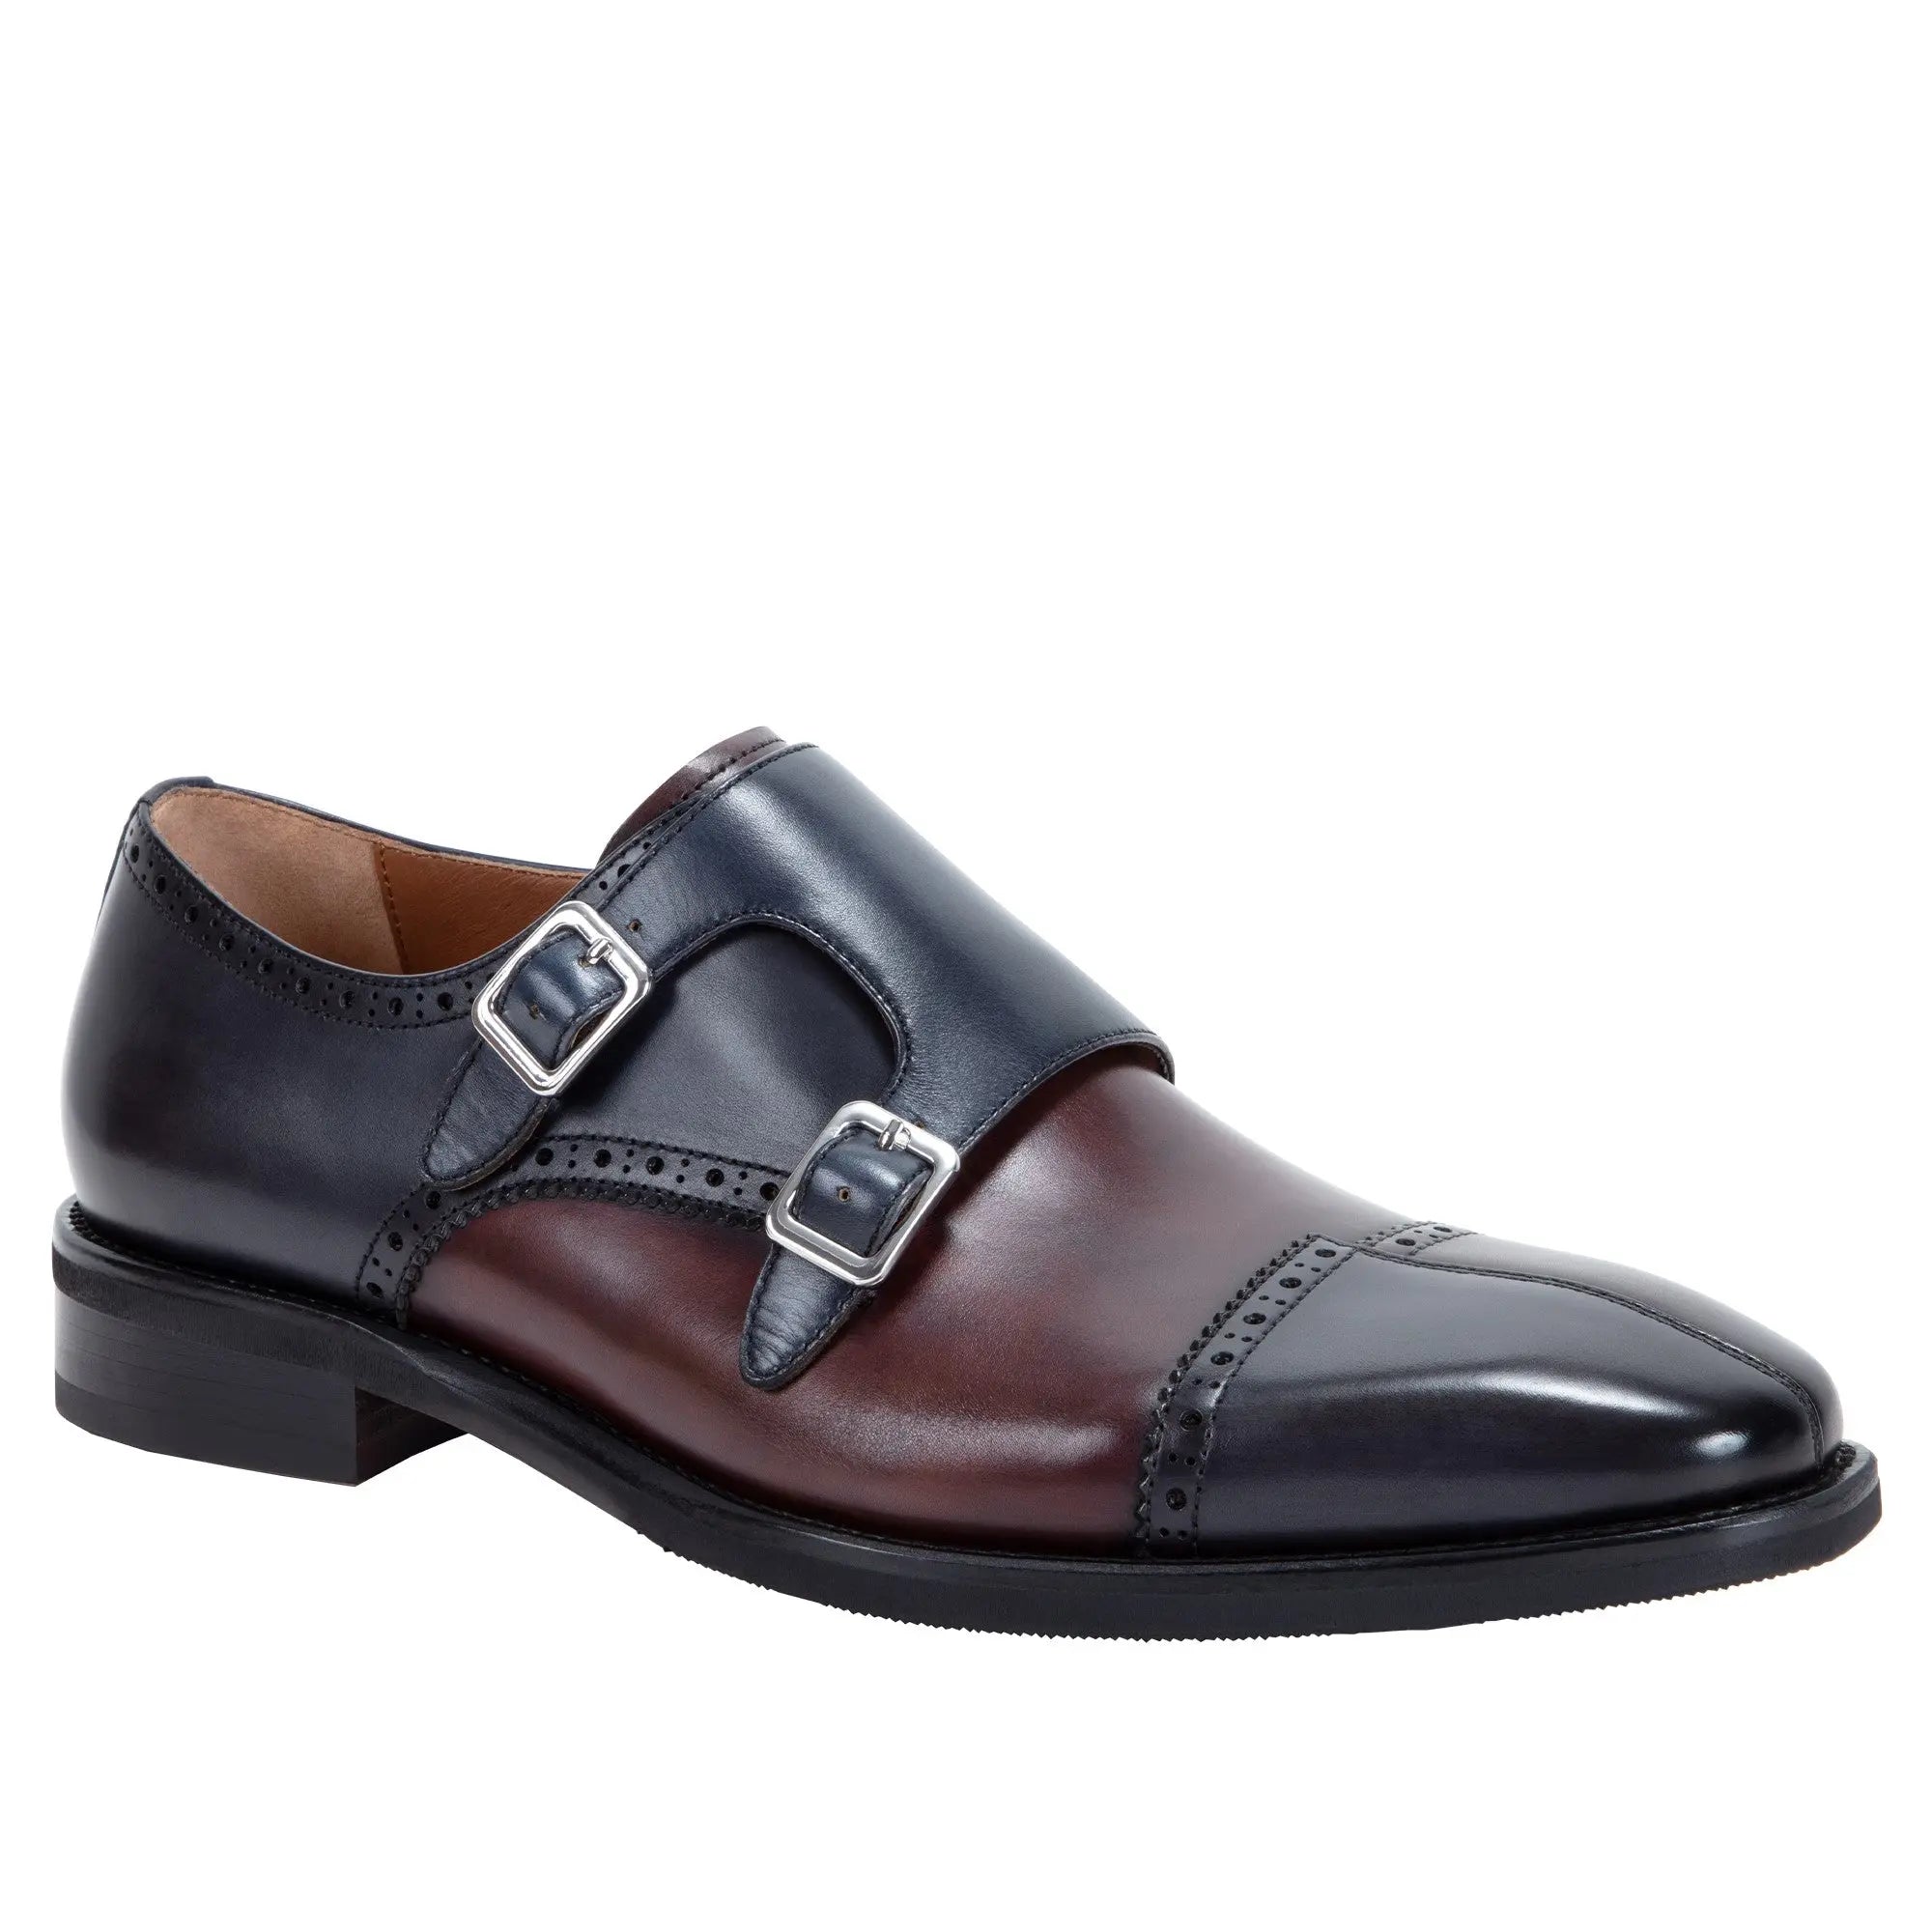 100% Handcraft leather shoes | Shoes for decent gentlemen – LEIZILEI